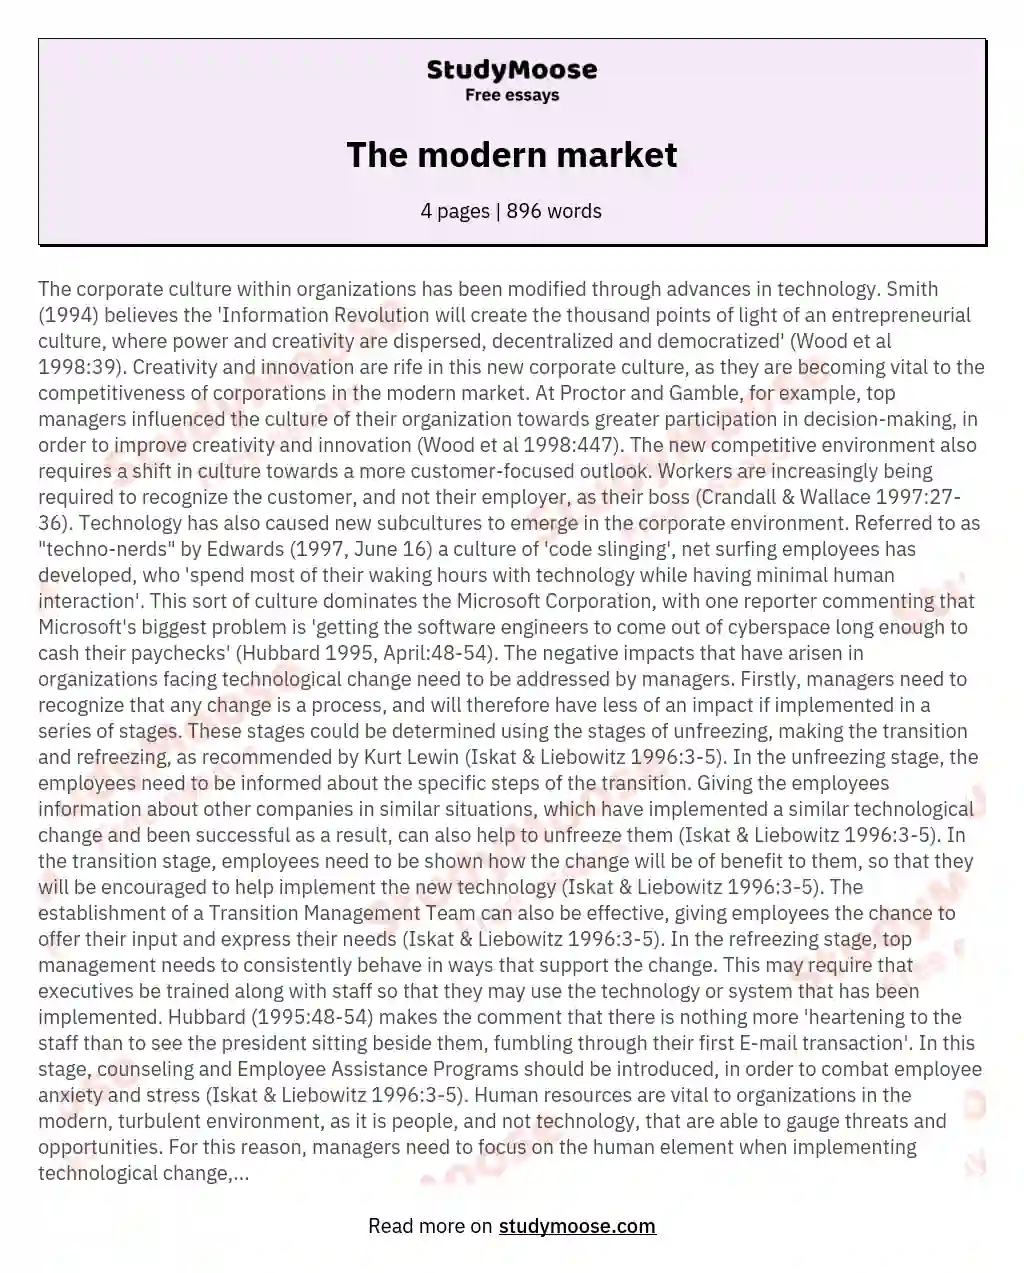 The modern market essay